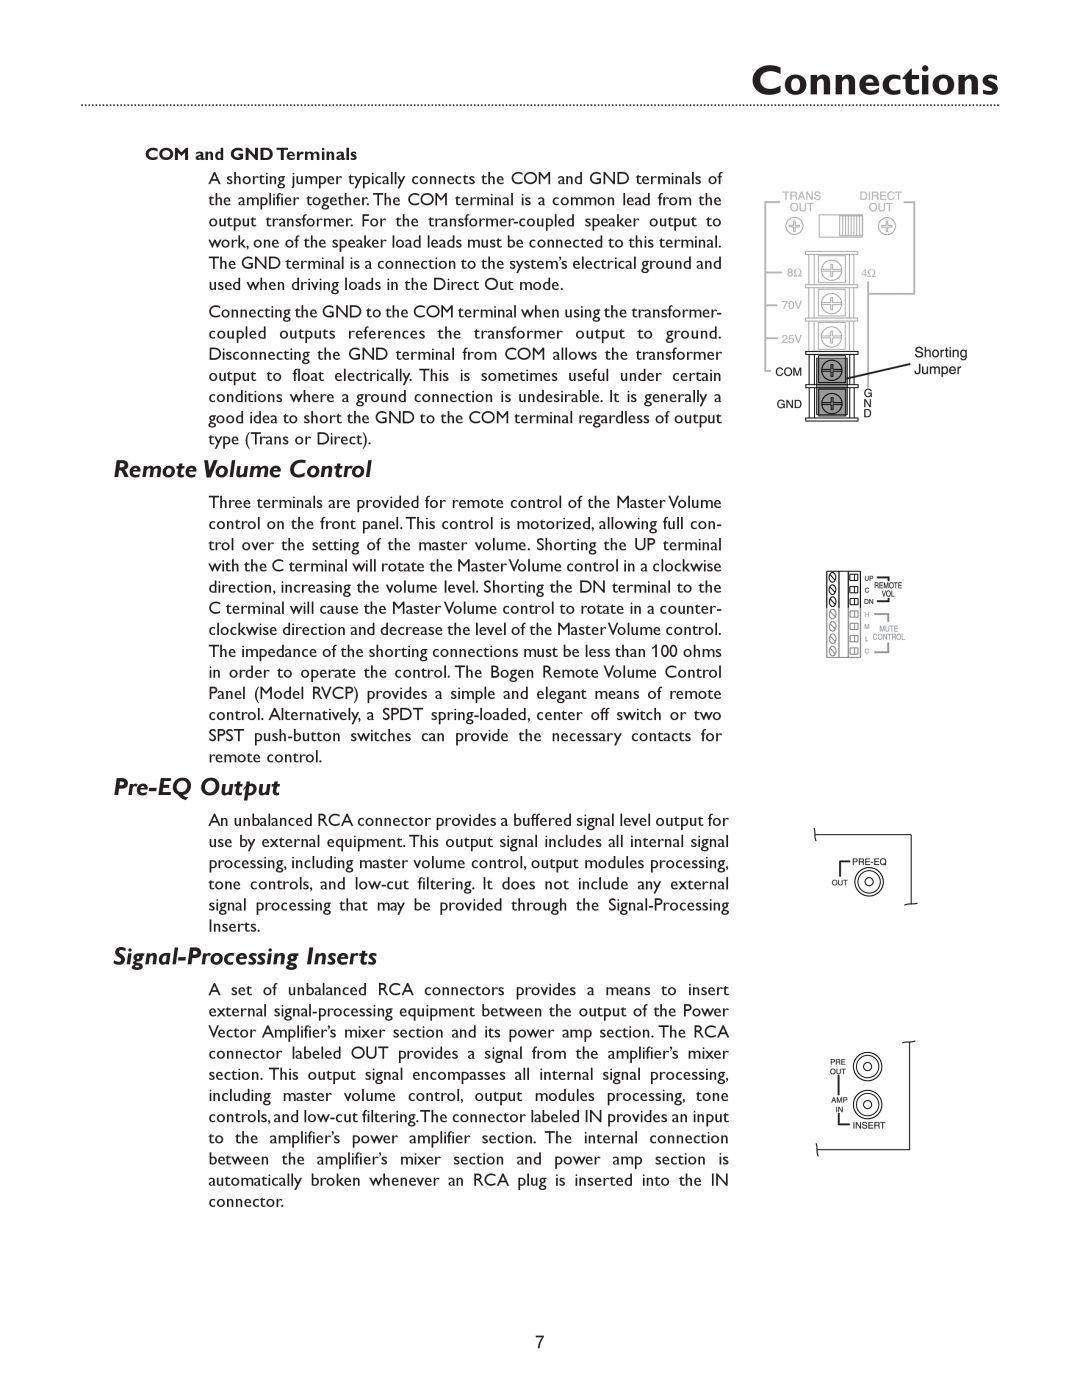 Bogen V150, V60, V100 Remote Volume Control, Pre-EQOutput, Signal-ProcessingInserts, COM and GND Terminals, Connections 